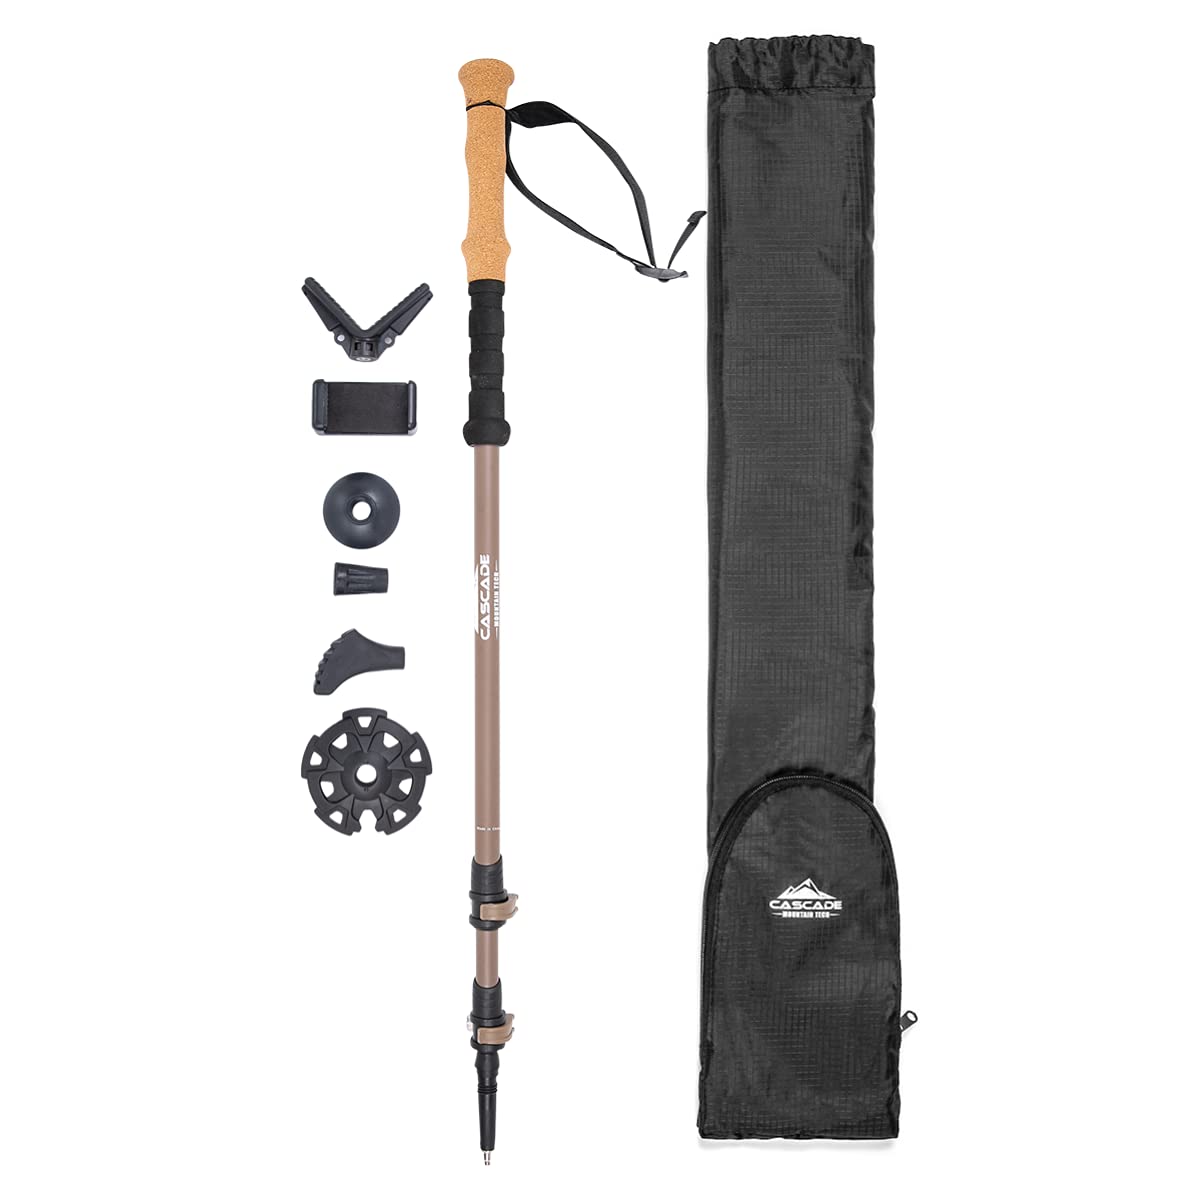 Cascade Mountain Tech Trekking Poles - Carbon Fiber Monopod Walking or Hiking Stick with Accessories Mount Adjustable Quick